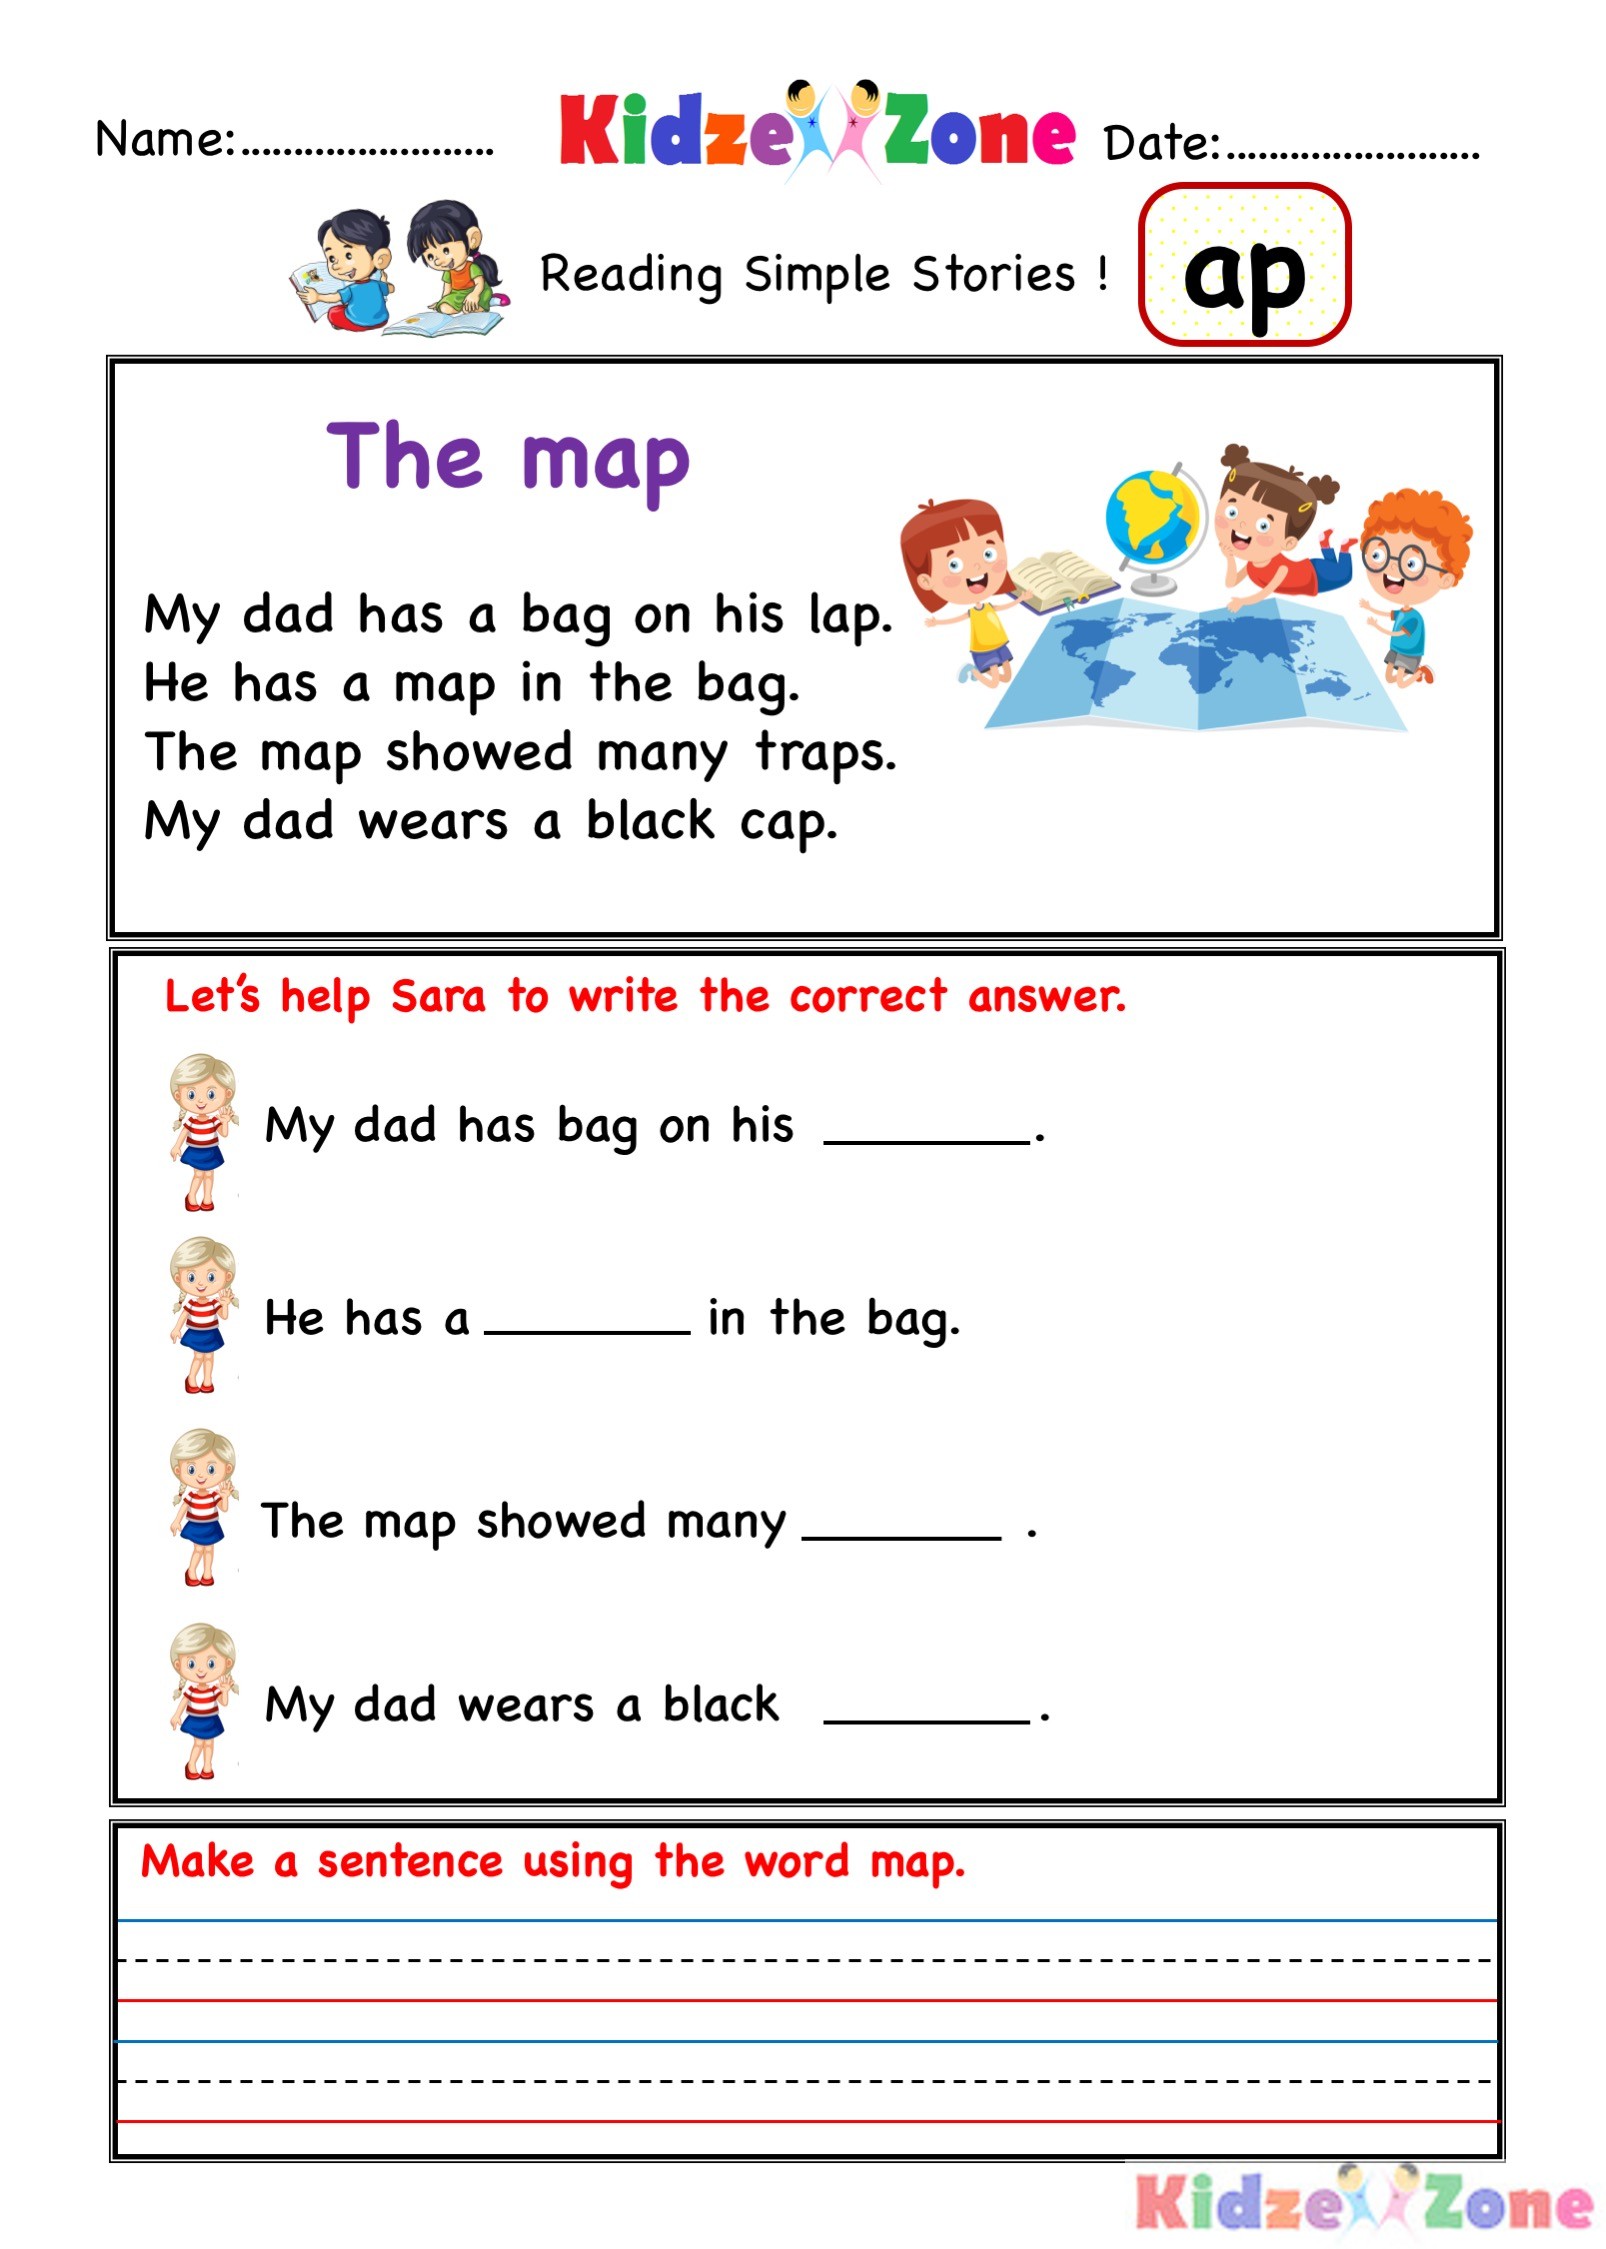 Kindergarten worksheets - ap word family - reading ...